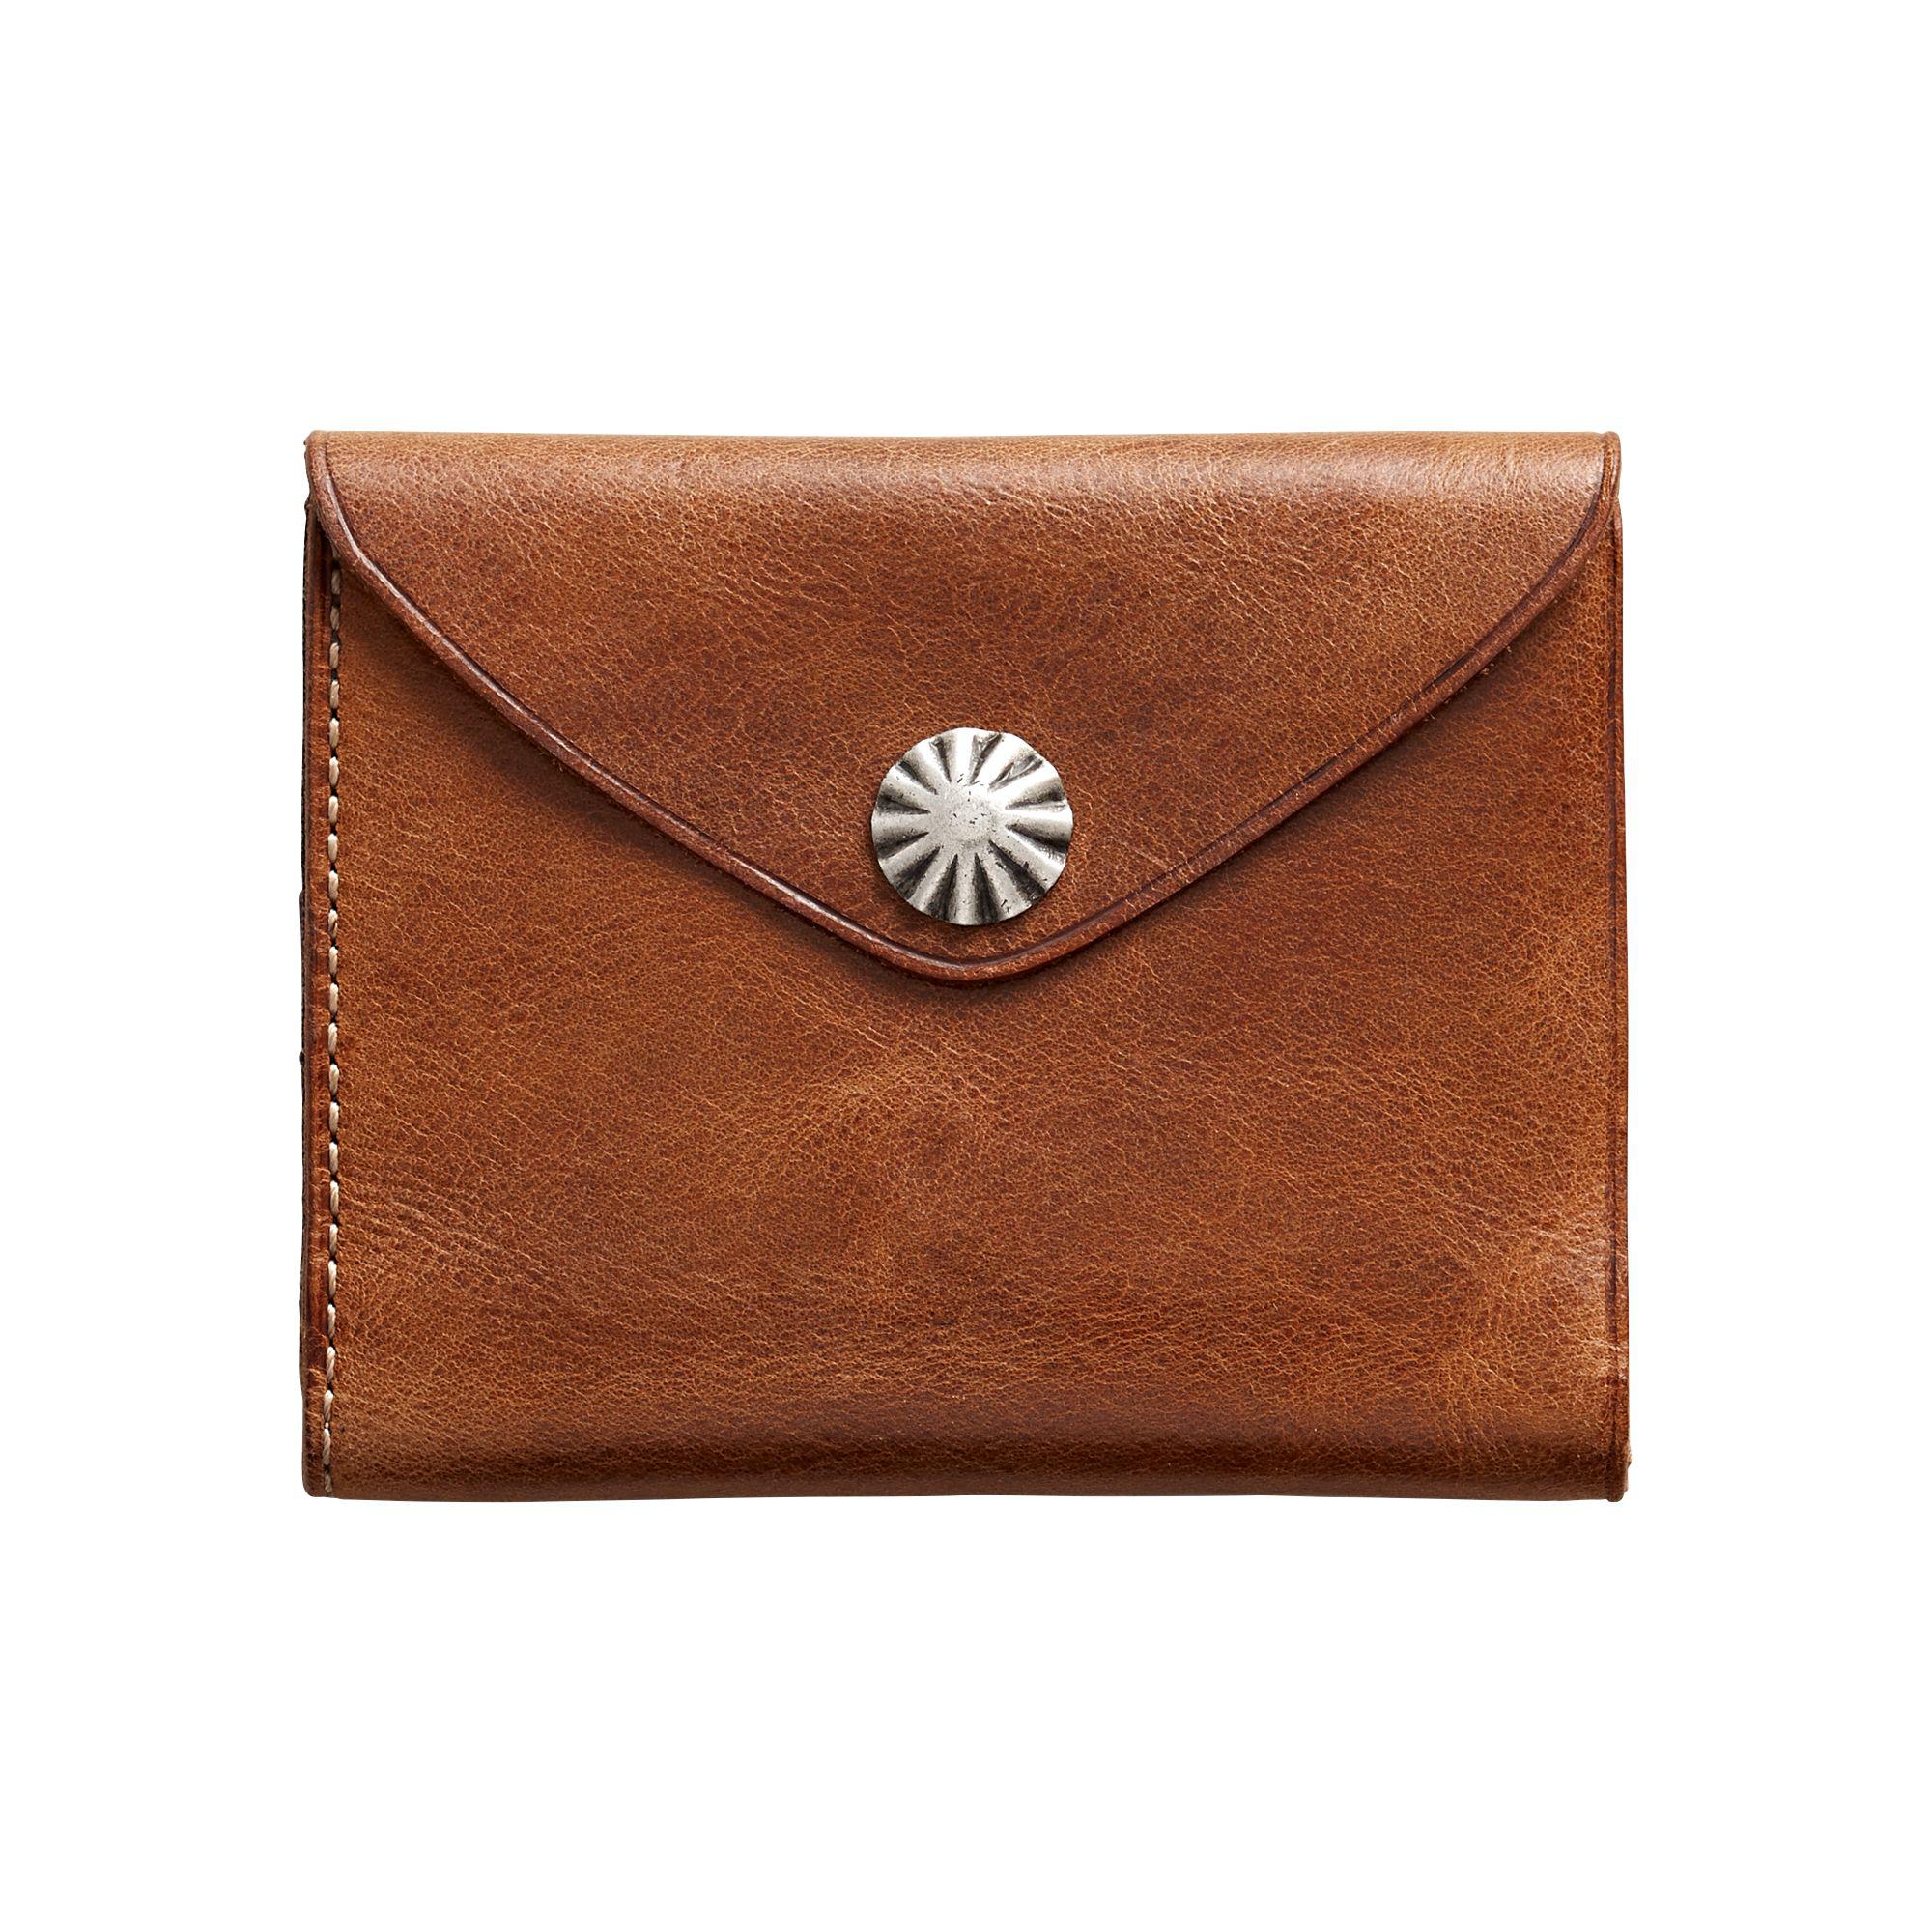 RRL Concho Leather Envelope Wallet in Brown for Men - Lyst